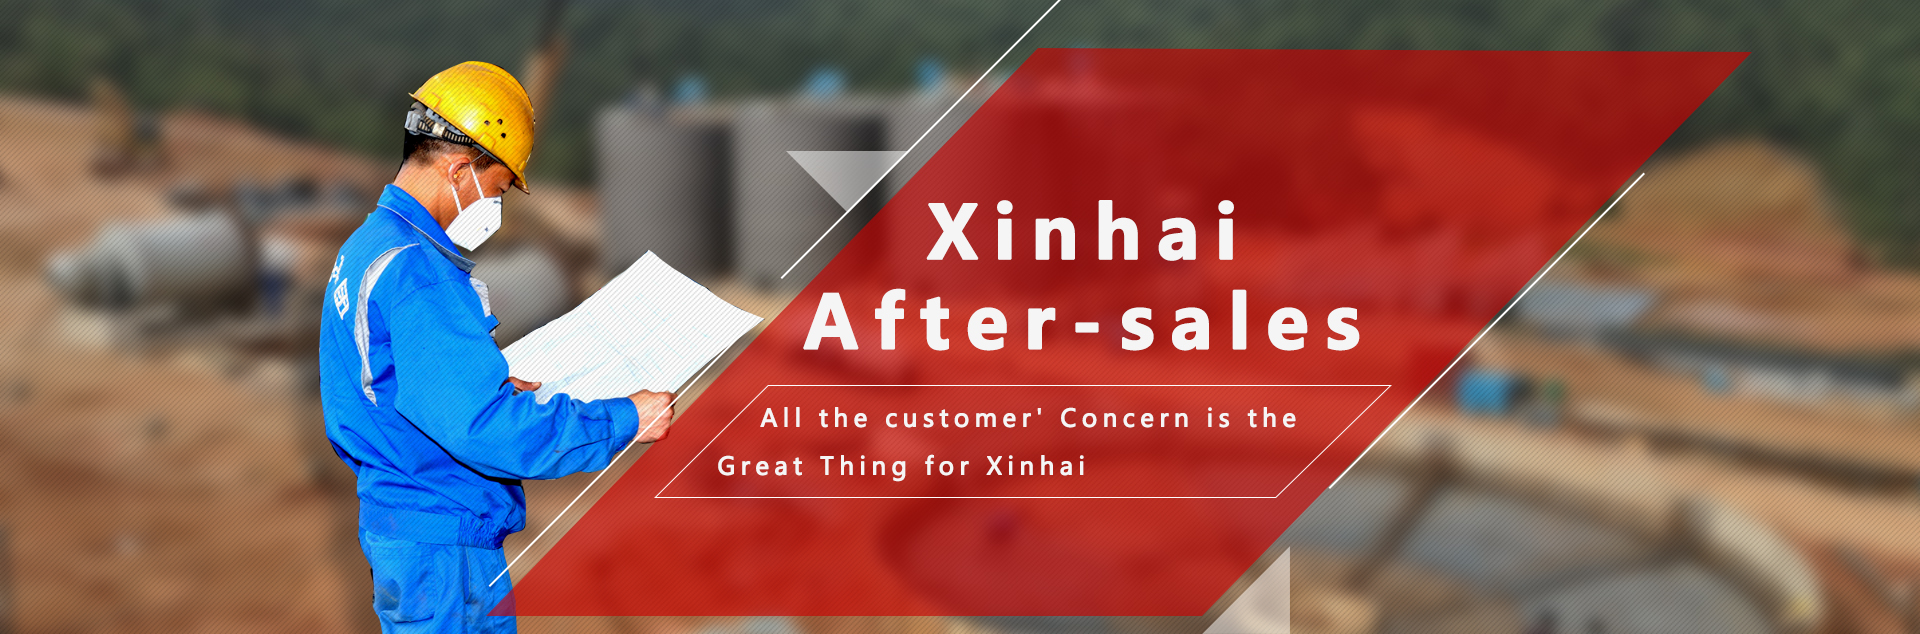 Xinhai aftersale service